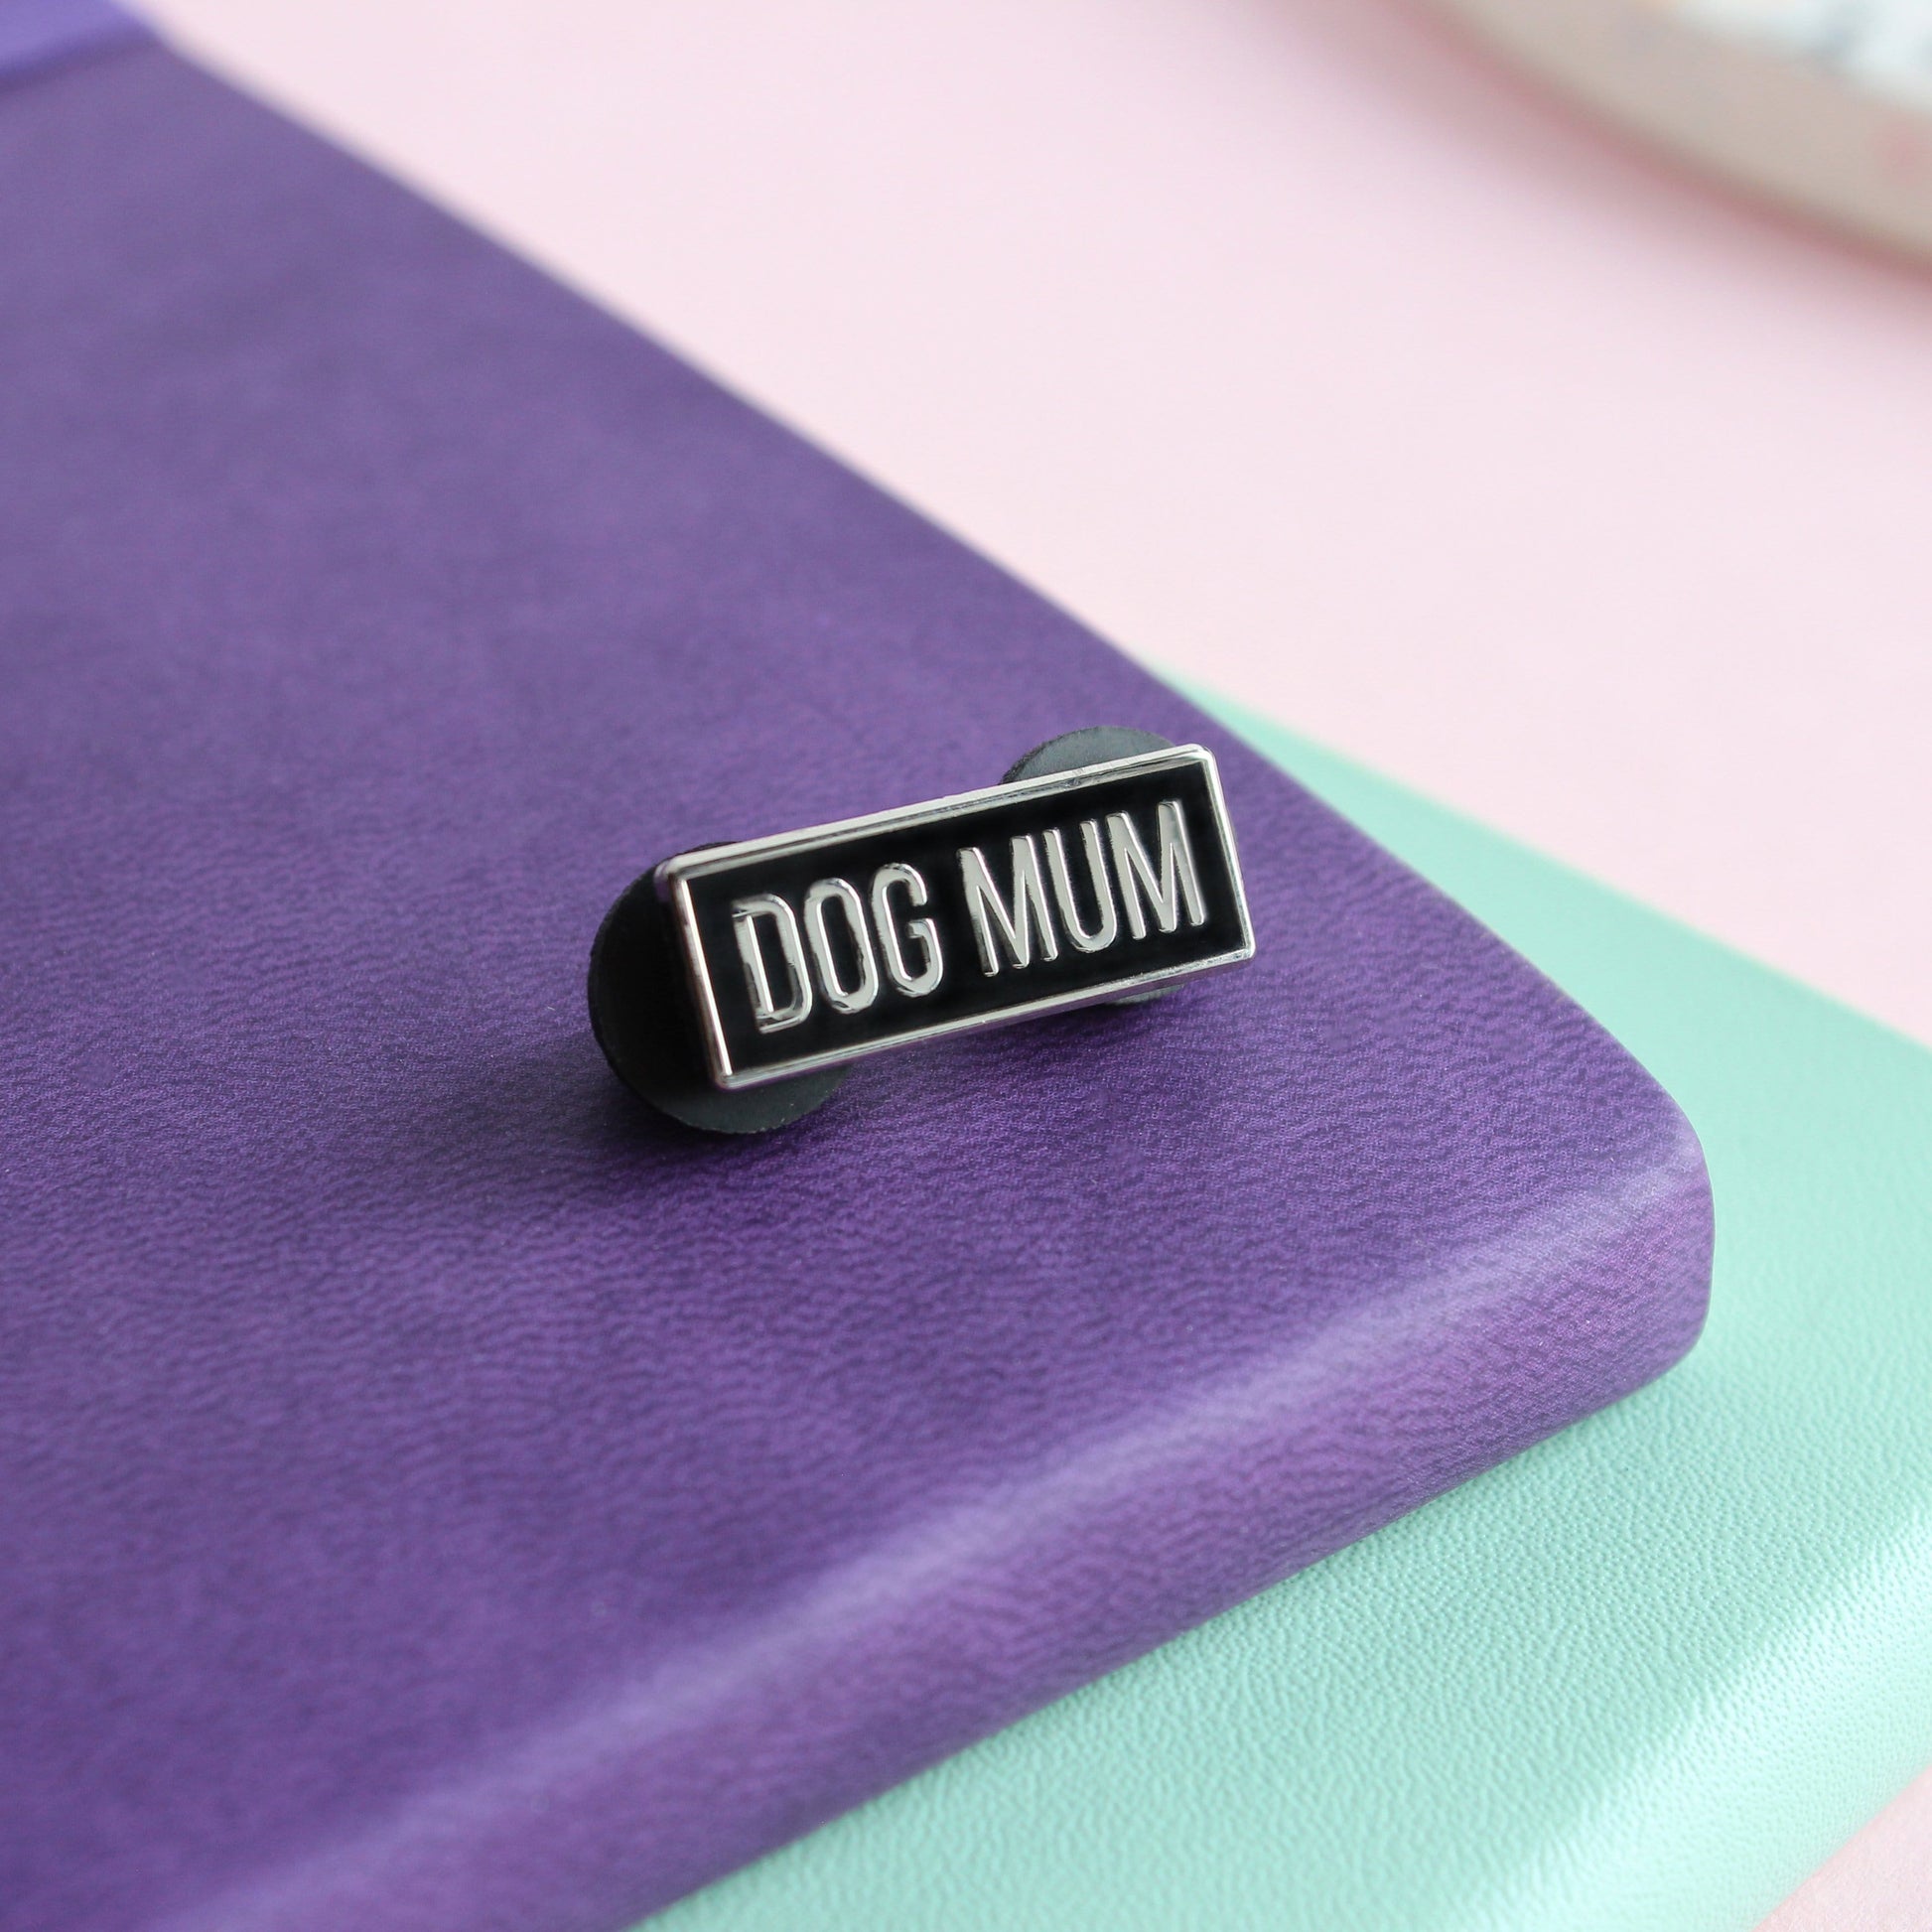 Dog mum pin badge from Purple Tree Designs